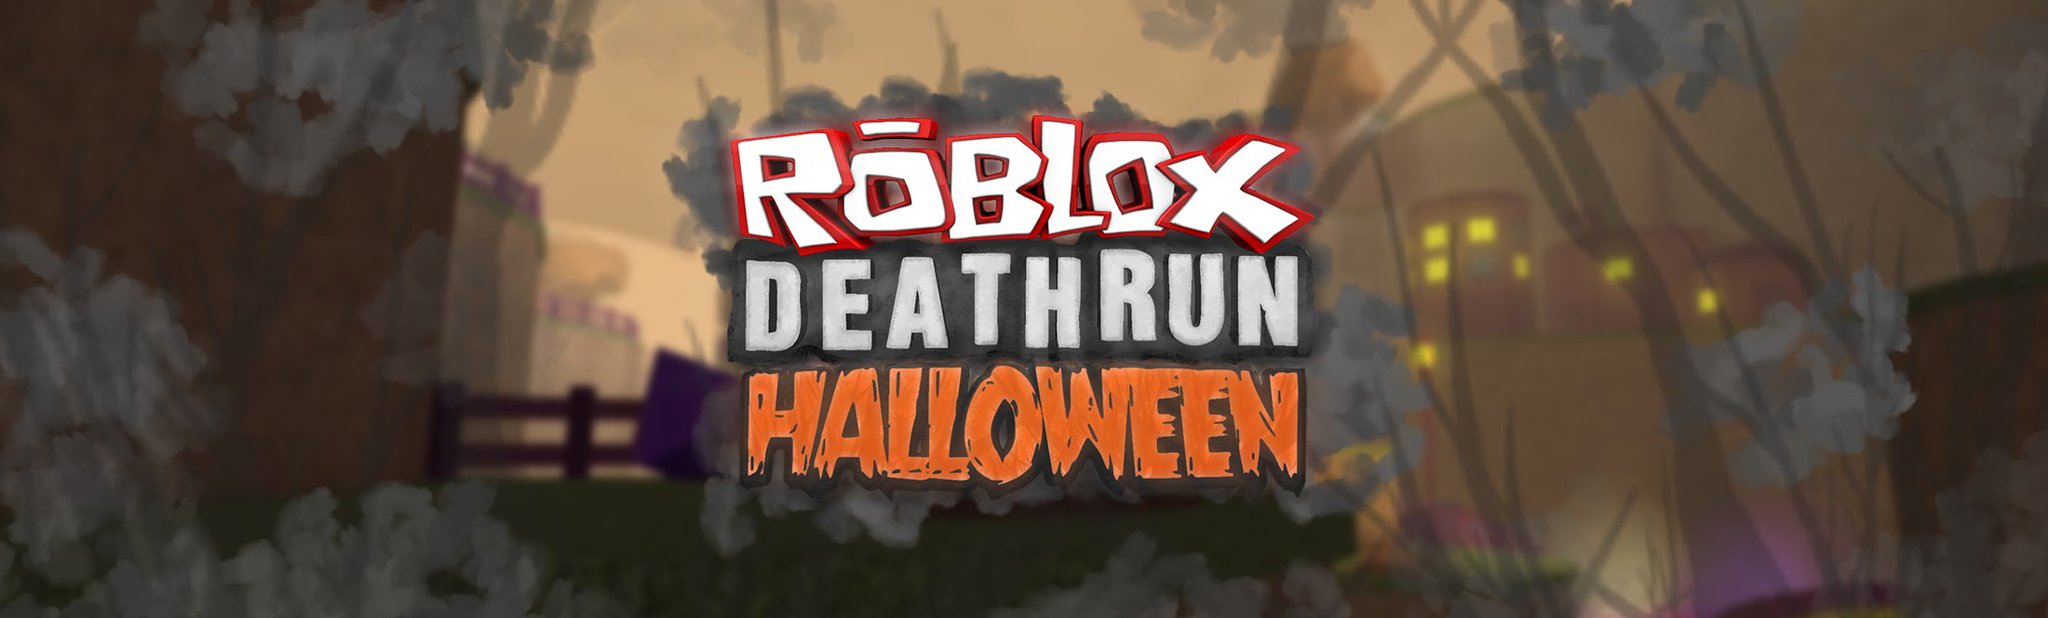 Wsly On Twitter Roblox Deathrun Halloween Is Live Enjoy A New